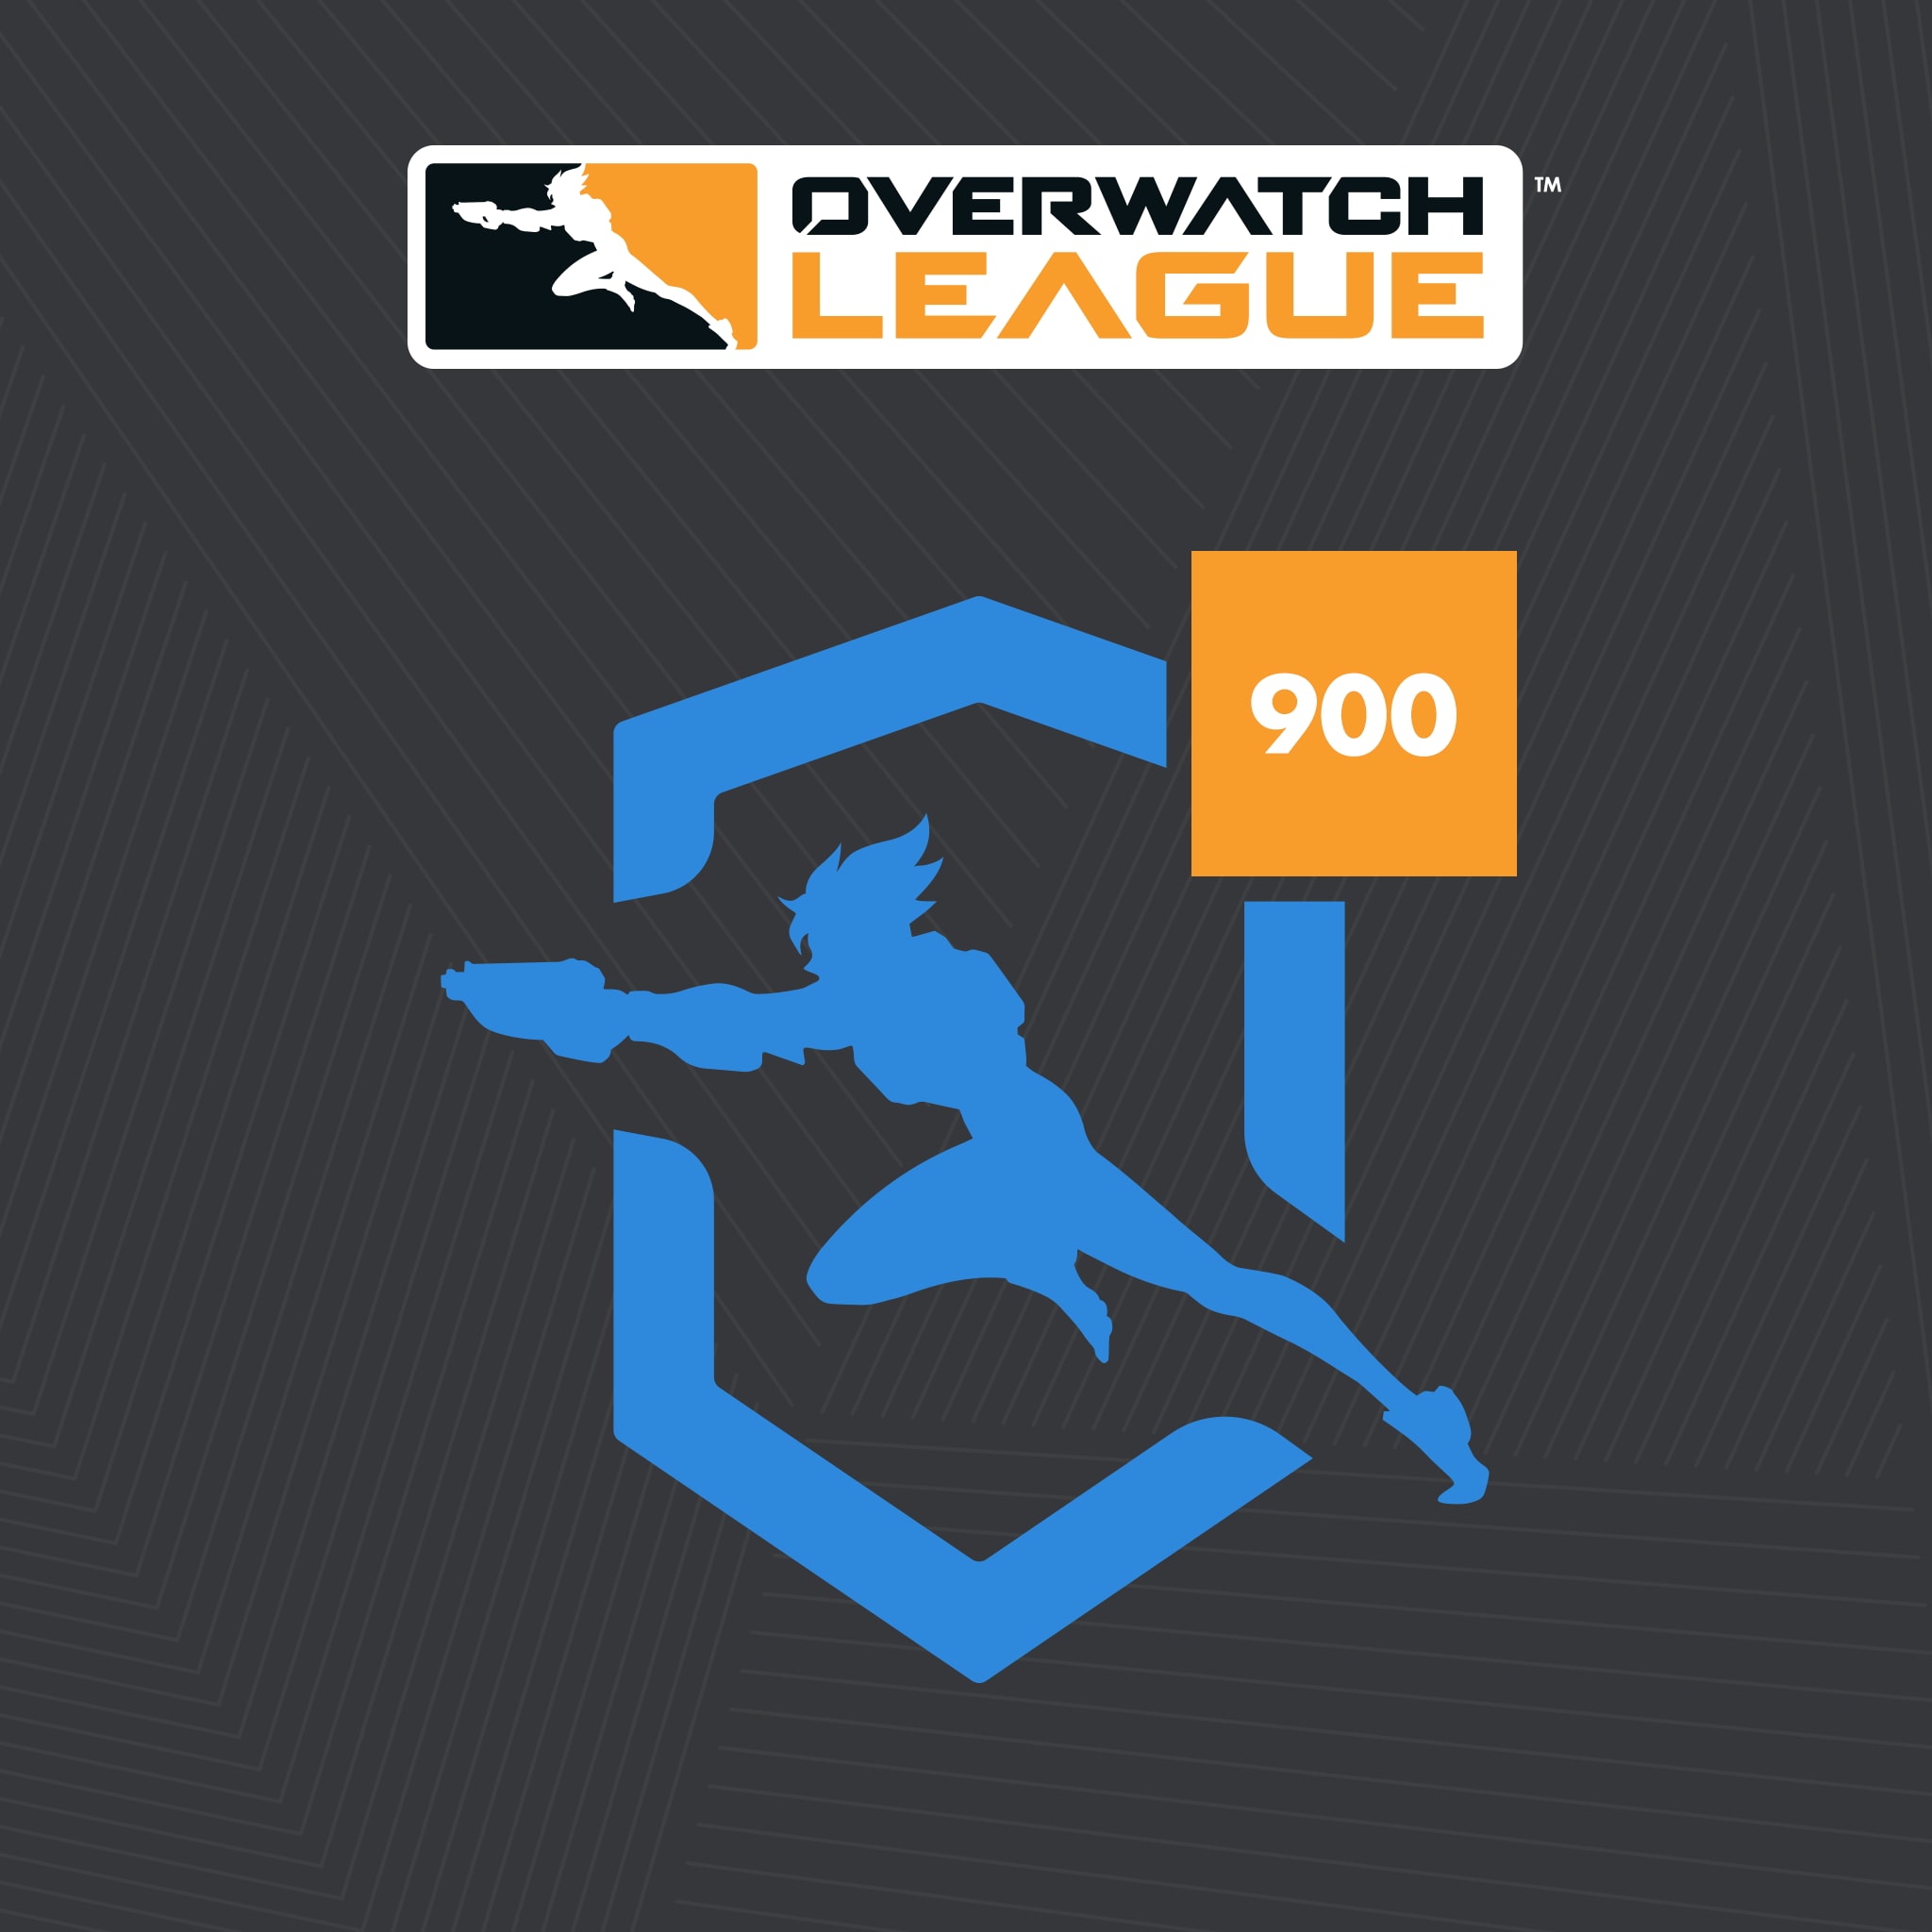 Overwatch League™ - 900 fichas de la OWL